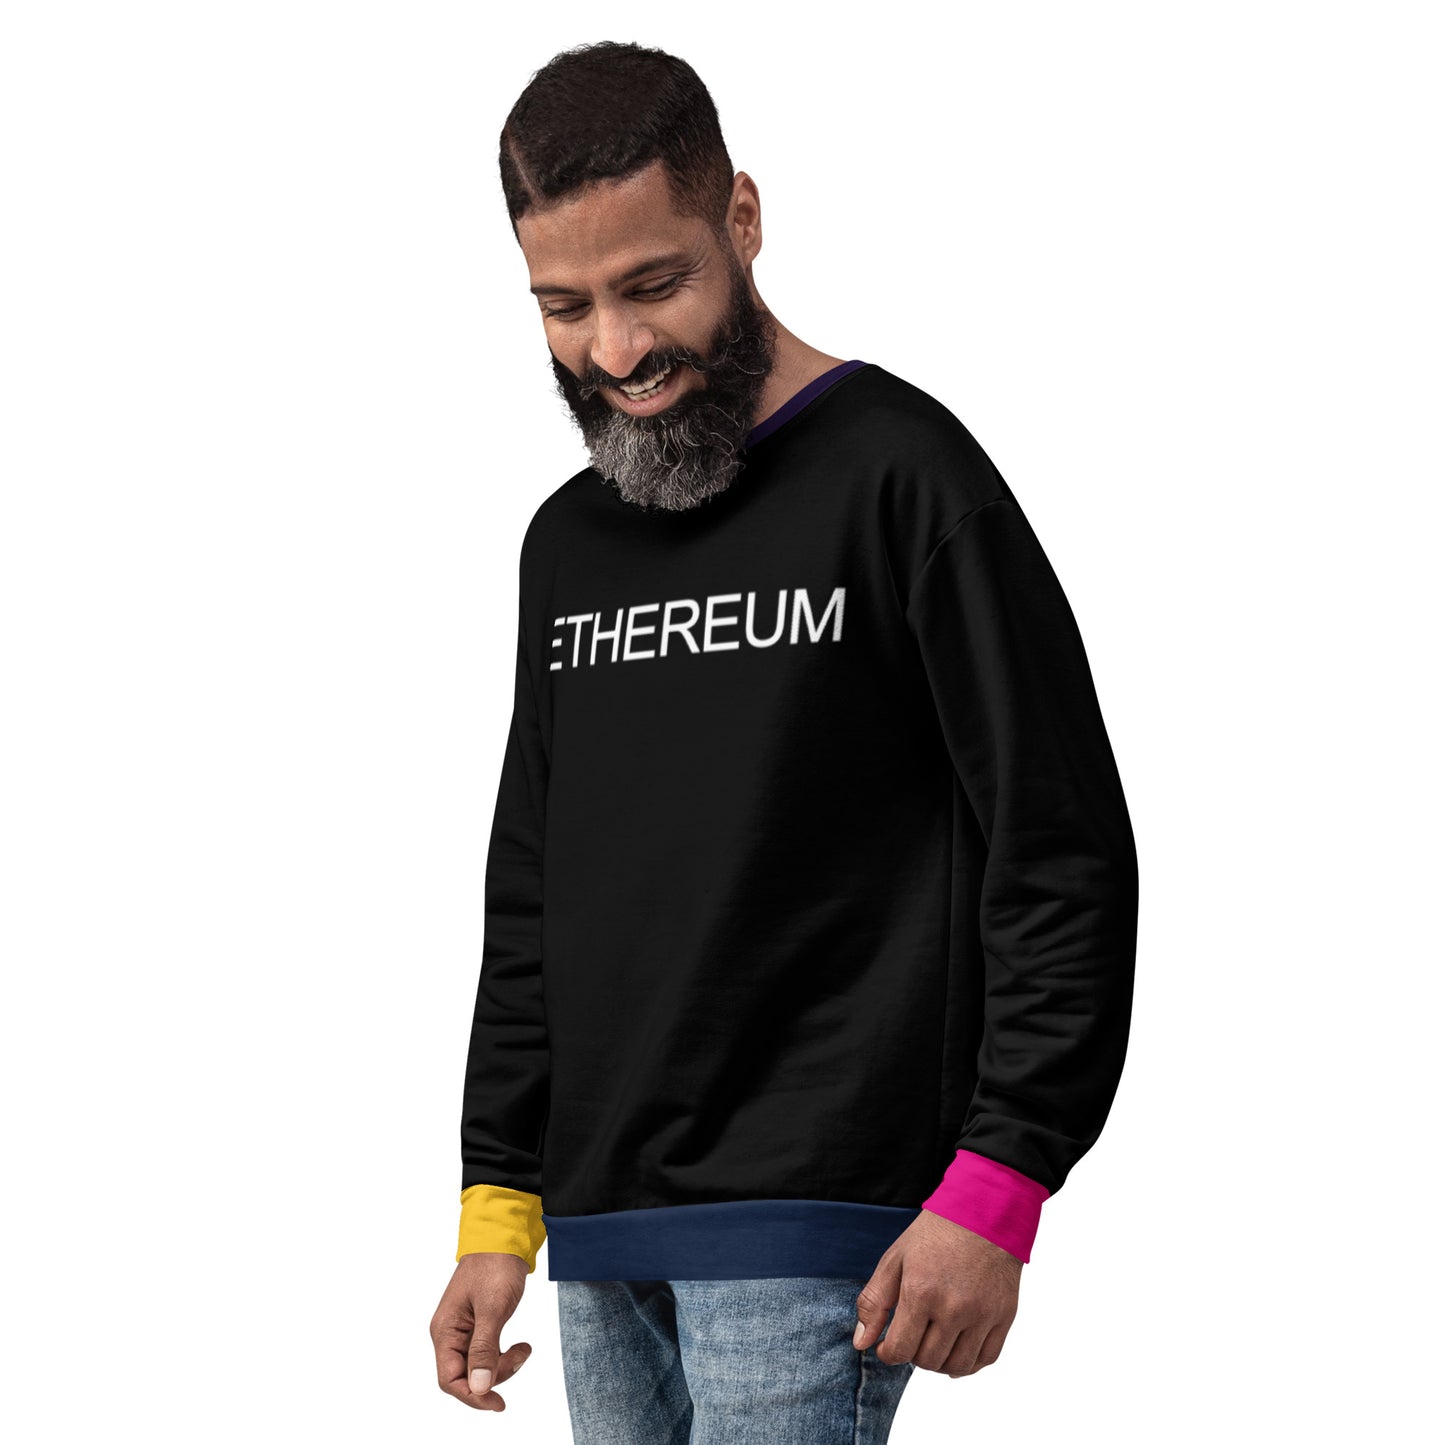 Ethereum Multicolors Sweatshirt